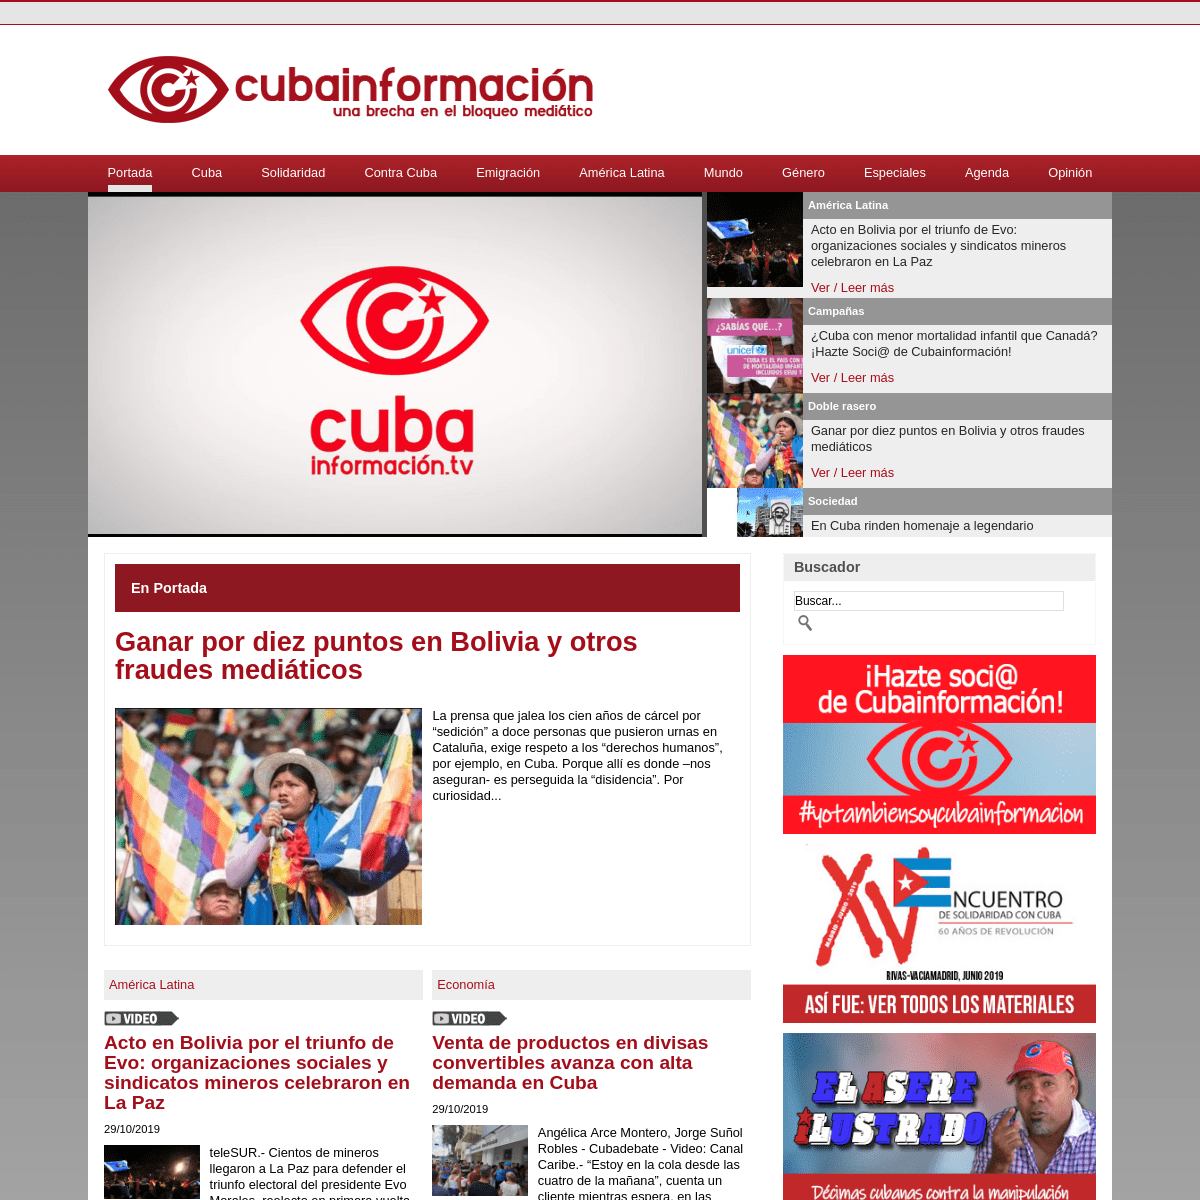 A complete backup of cubainformacion.tv